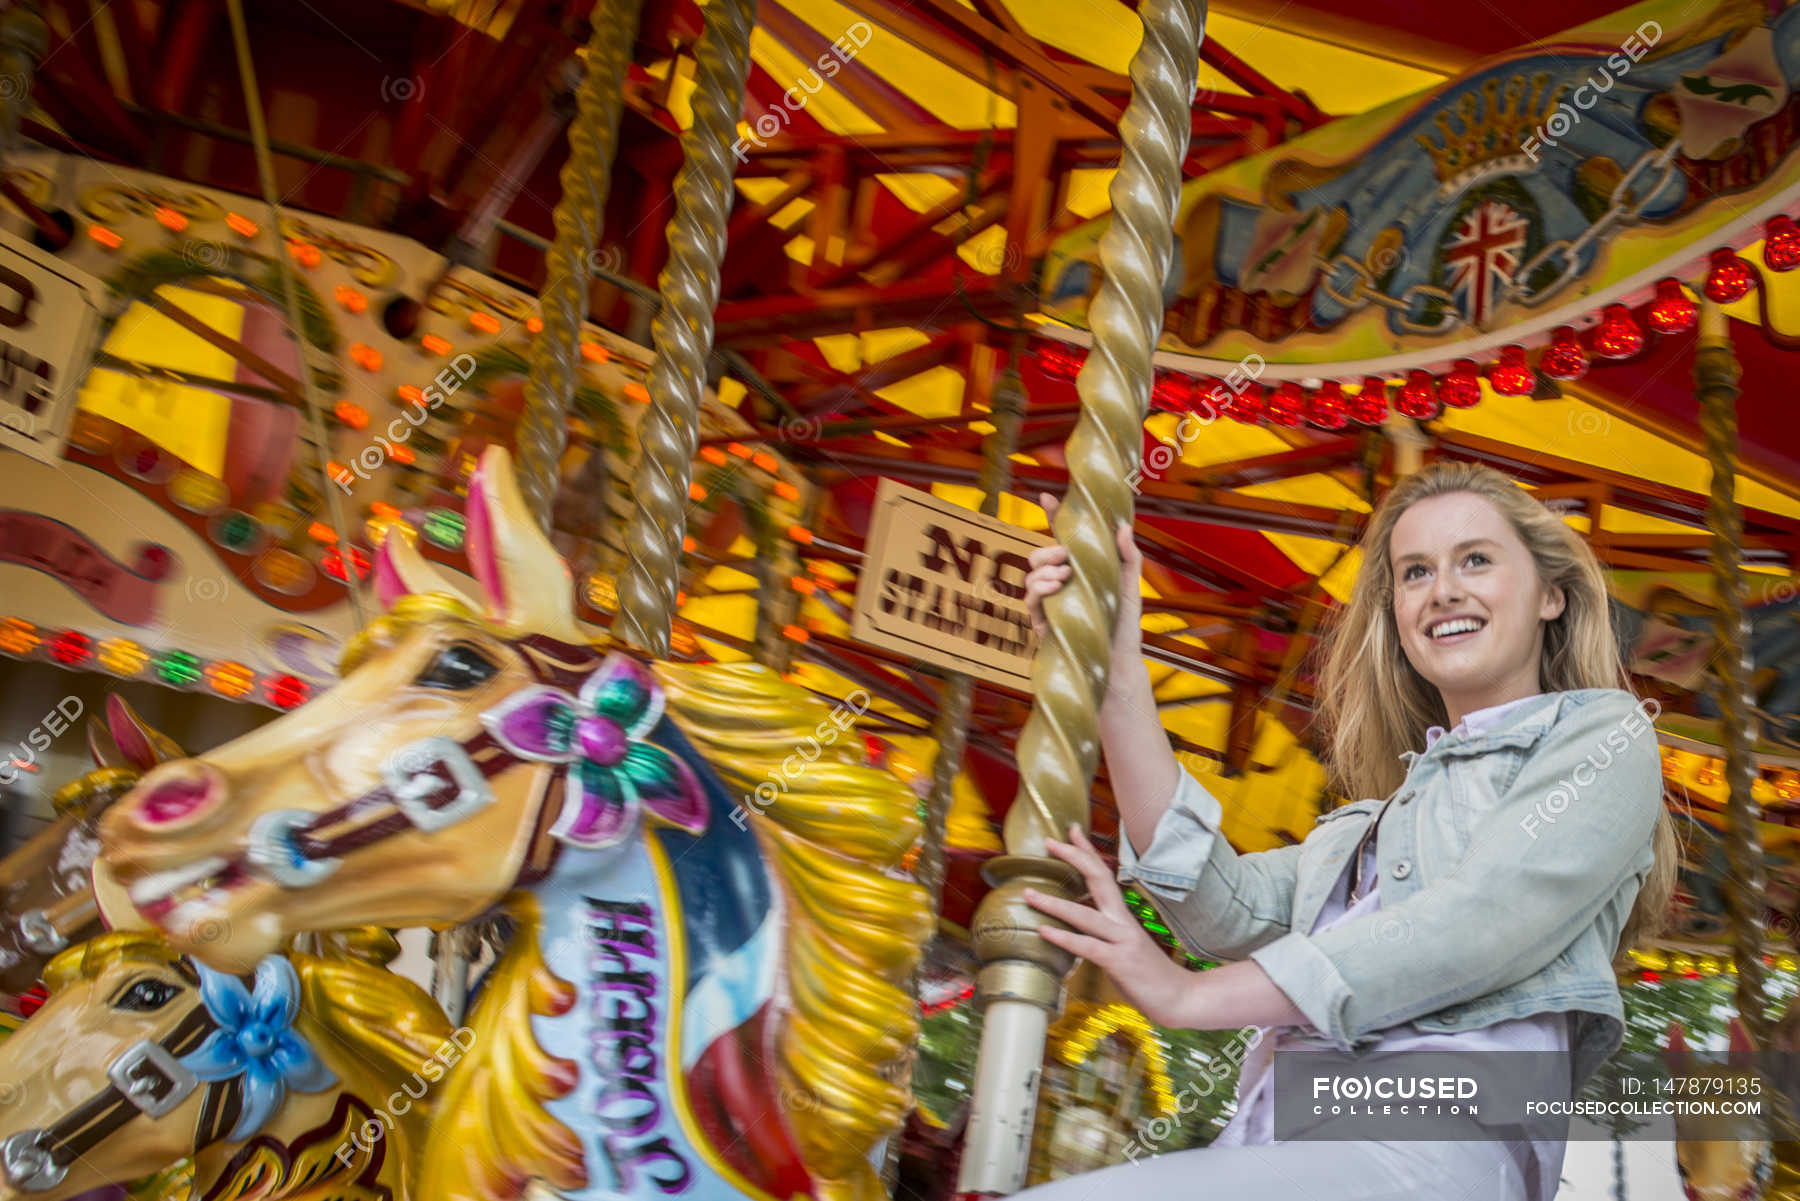 Girl riding carousel on South Bank — Stock Photo | #147879135